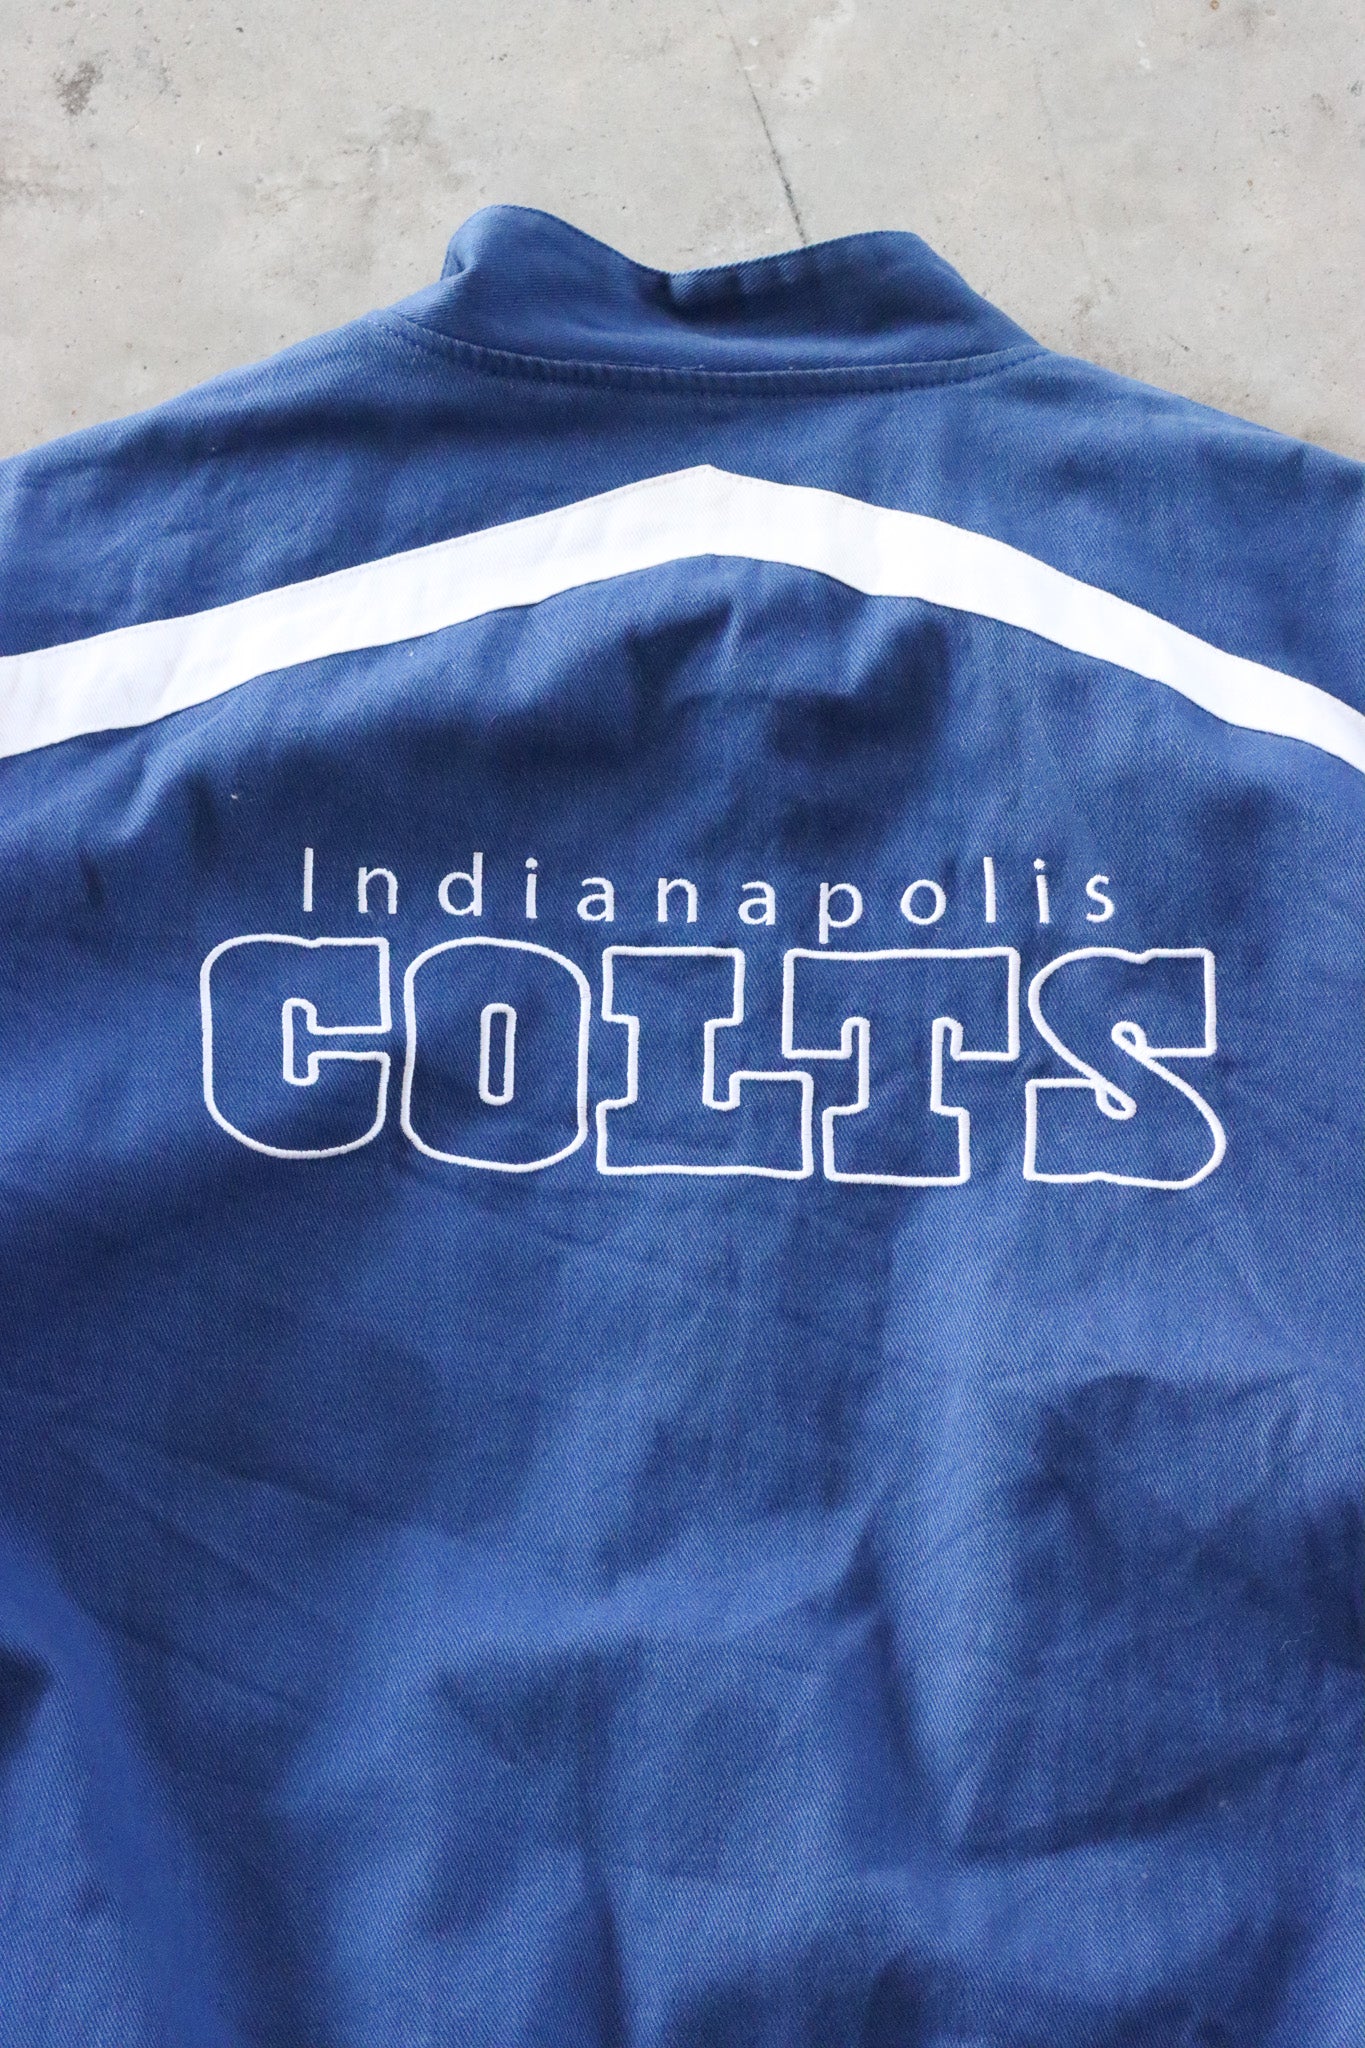 Vintage NFL Indianapolis Colts Jacket XXL